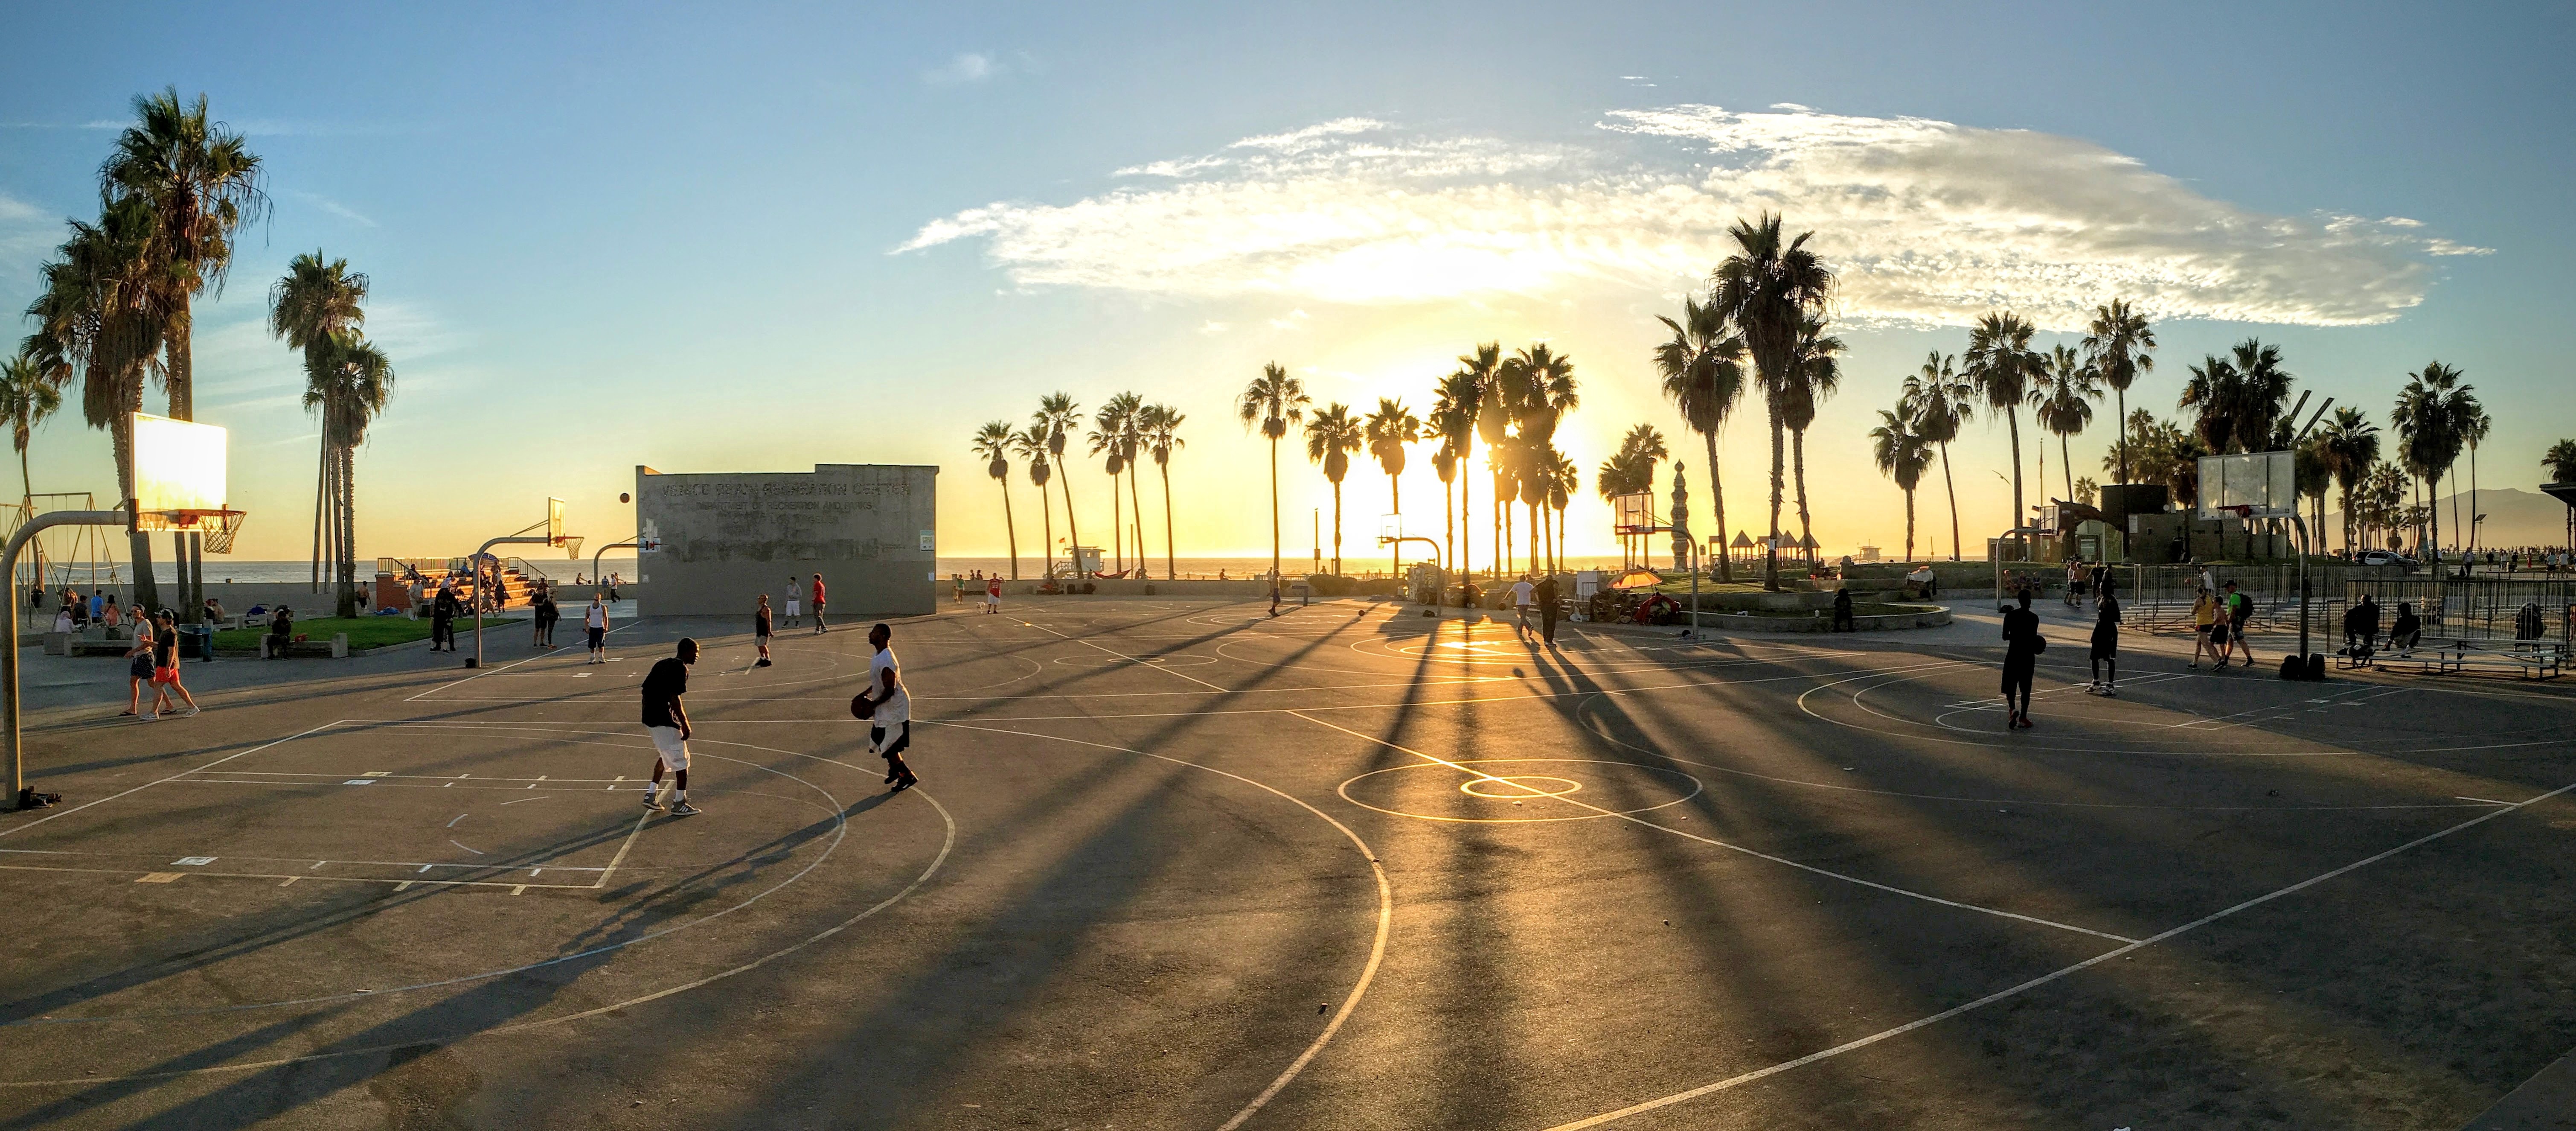 basketball court at sunset